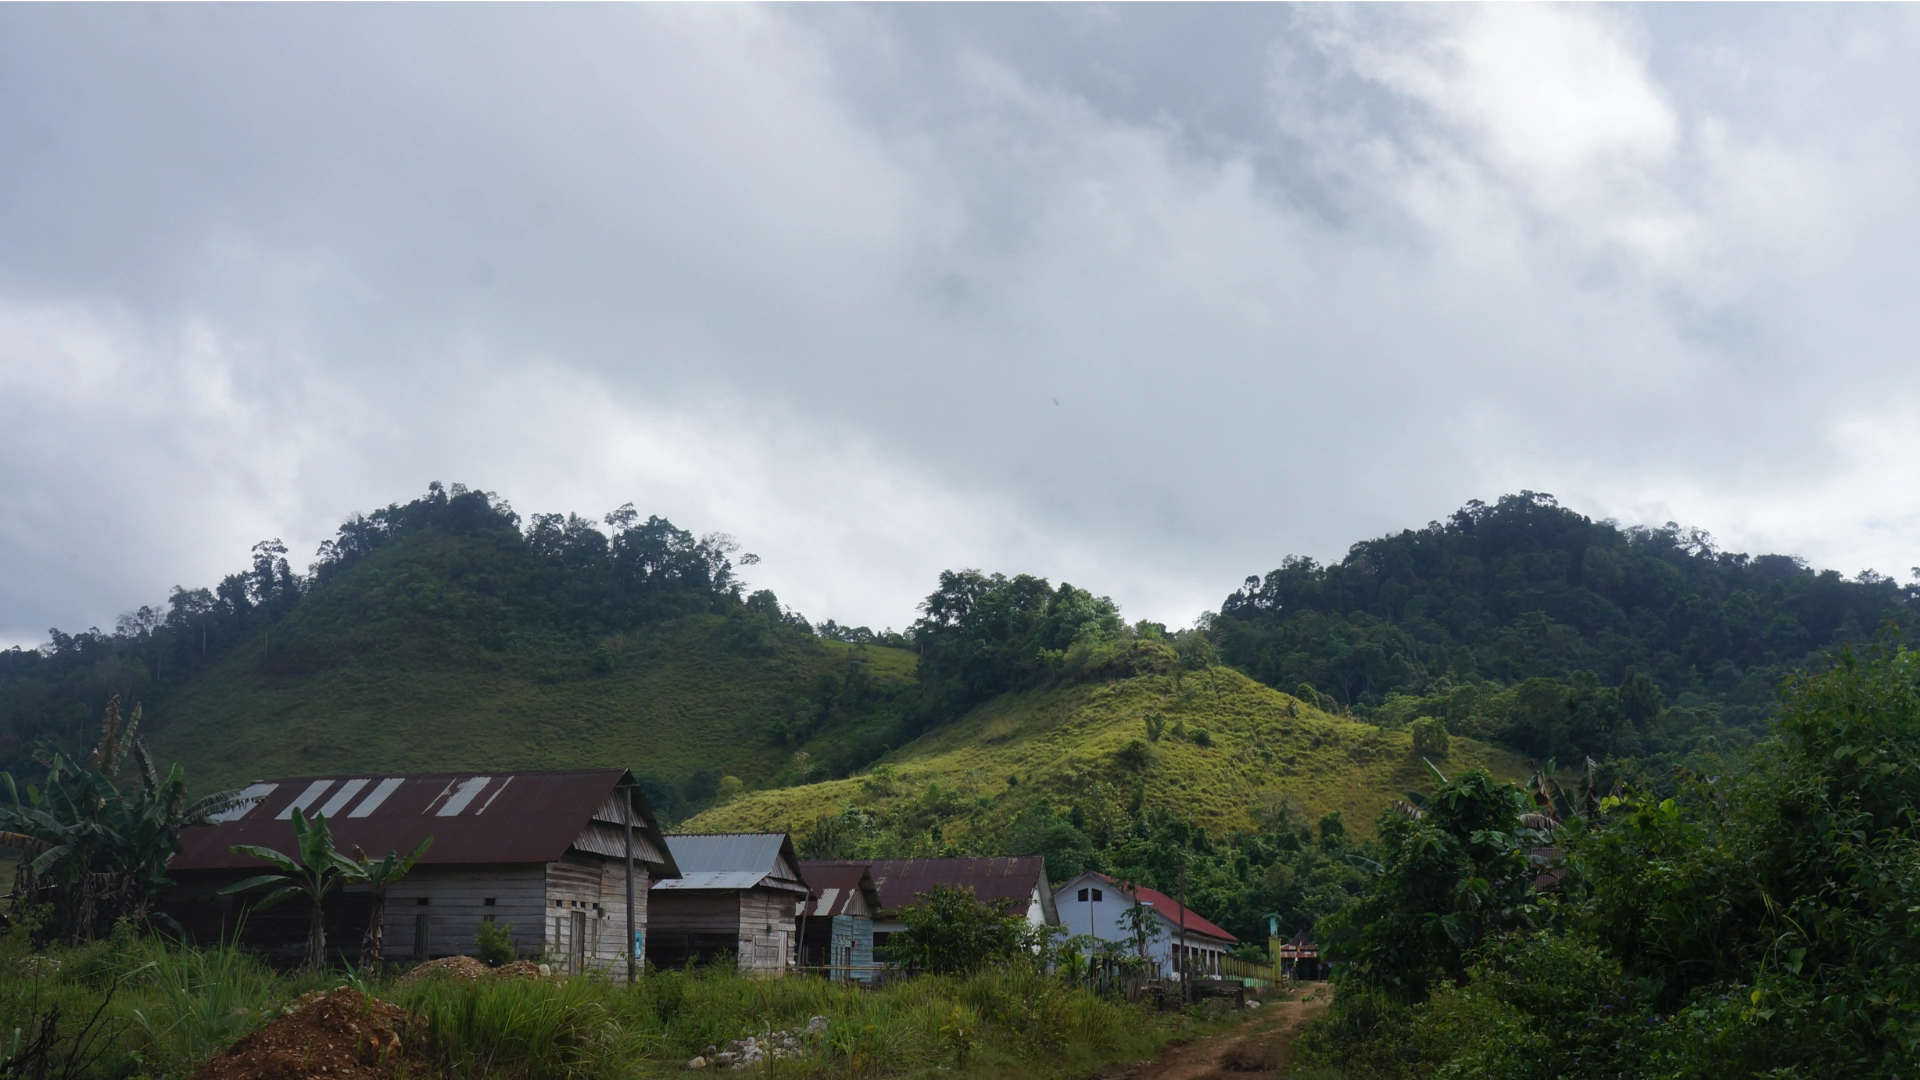 The village of Pondoa